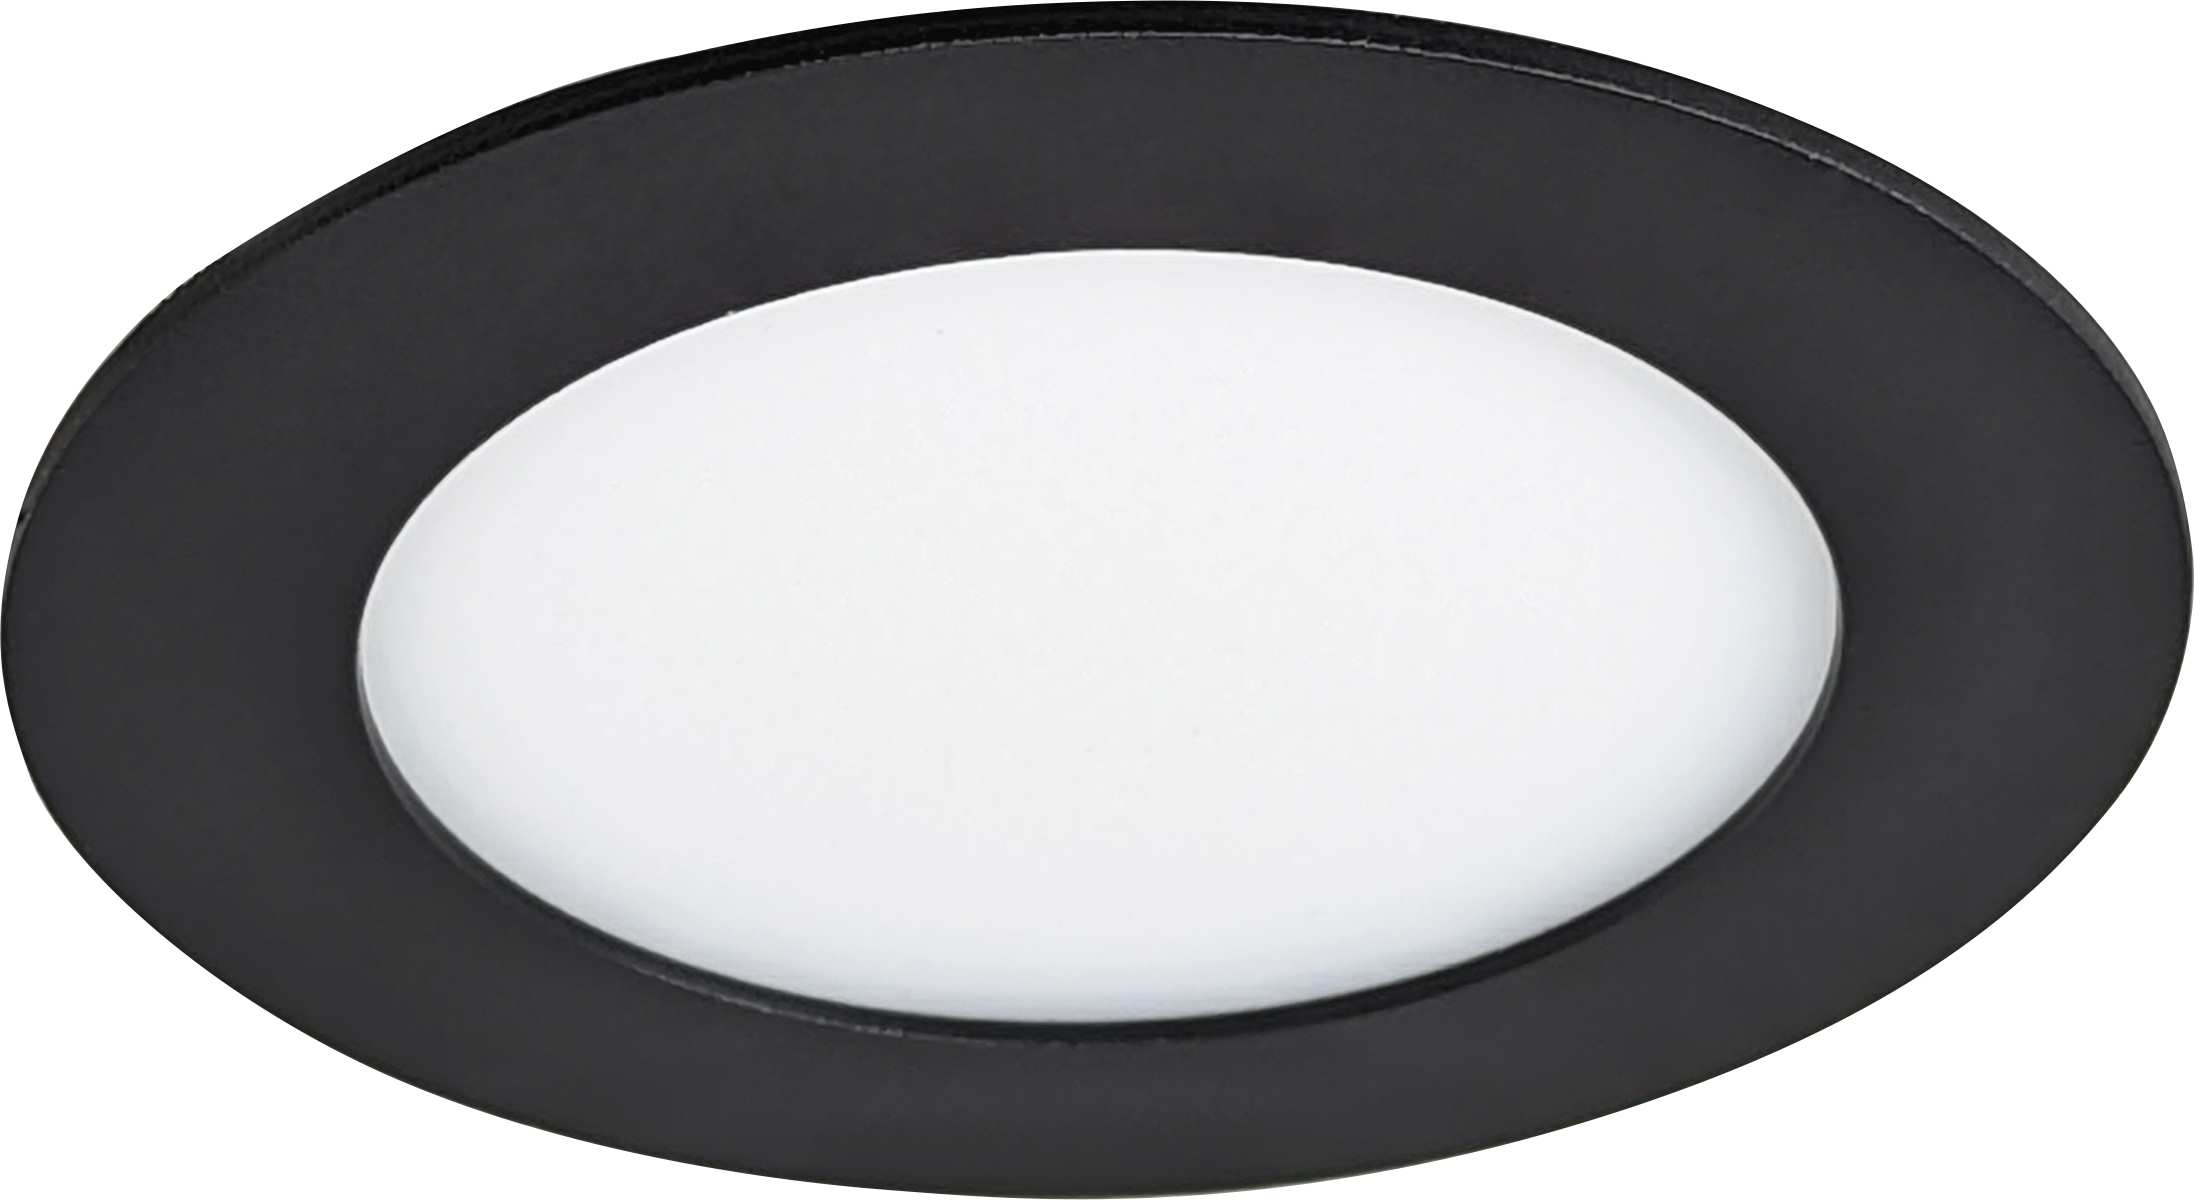 LED vestavné svítidlo LED30 VEGA-R Black 6W NW, 3800K, 370lm, IP44/20, Greenlux GXDW350 - zvìtšit obrázek